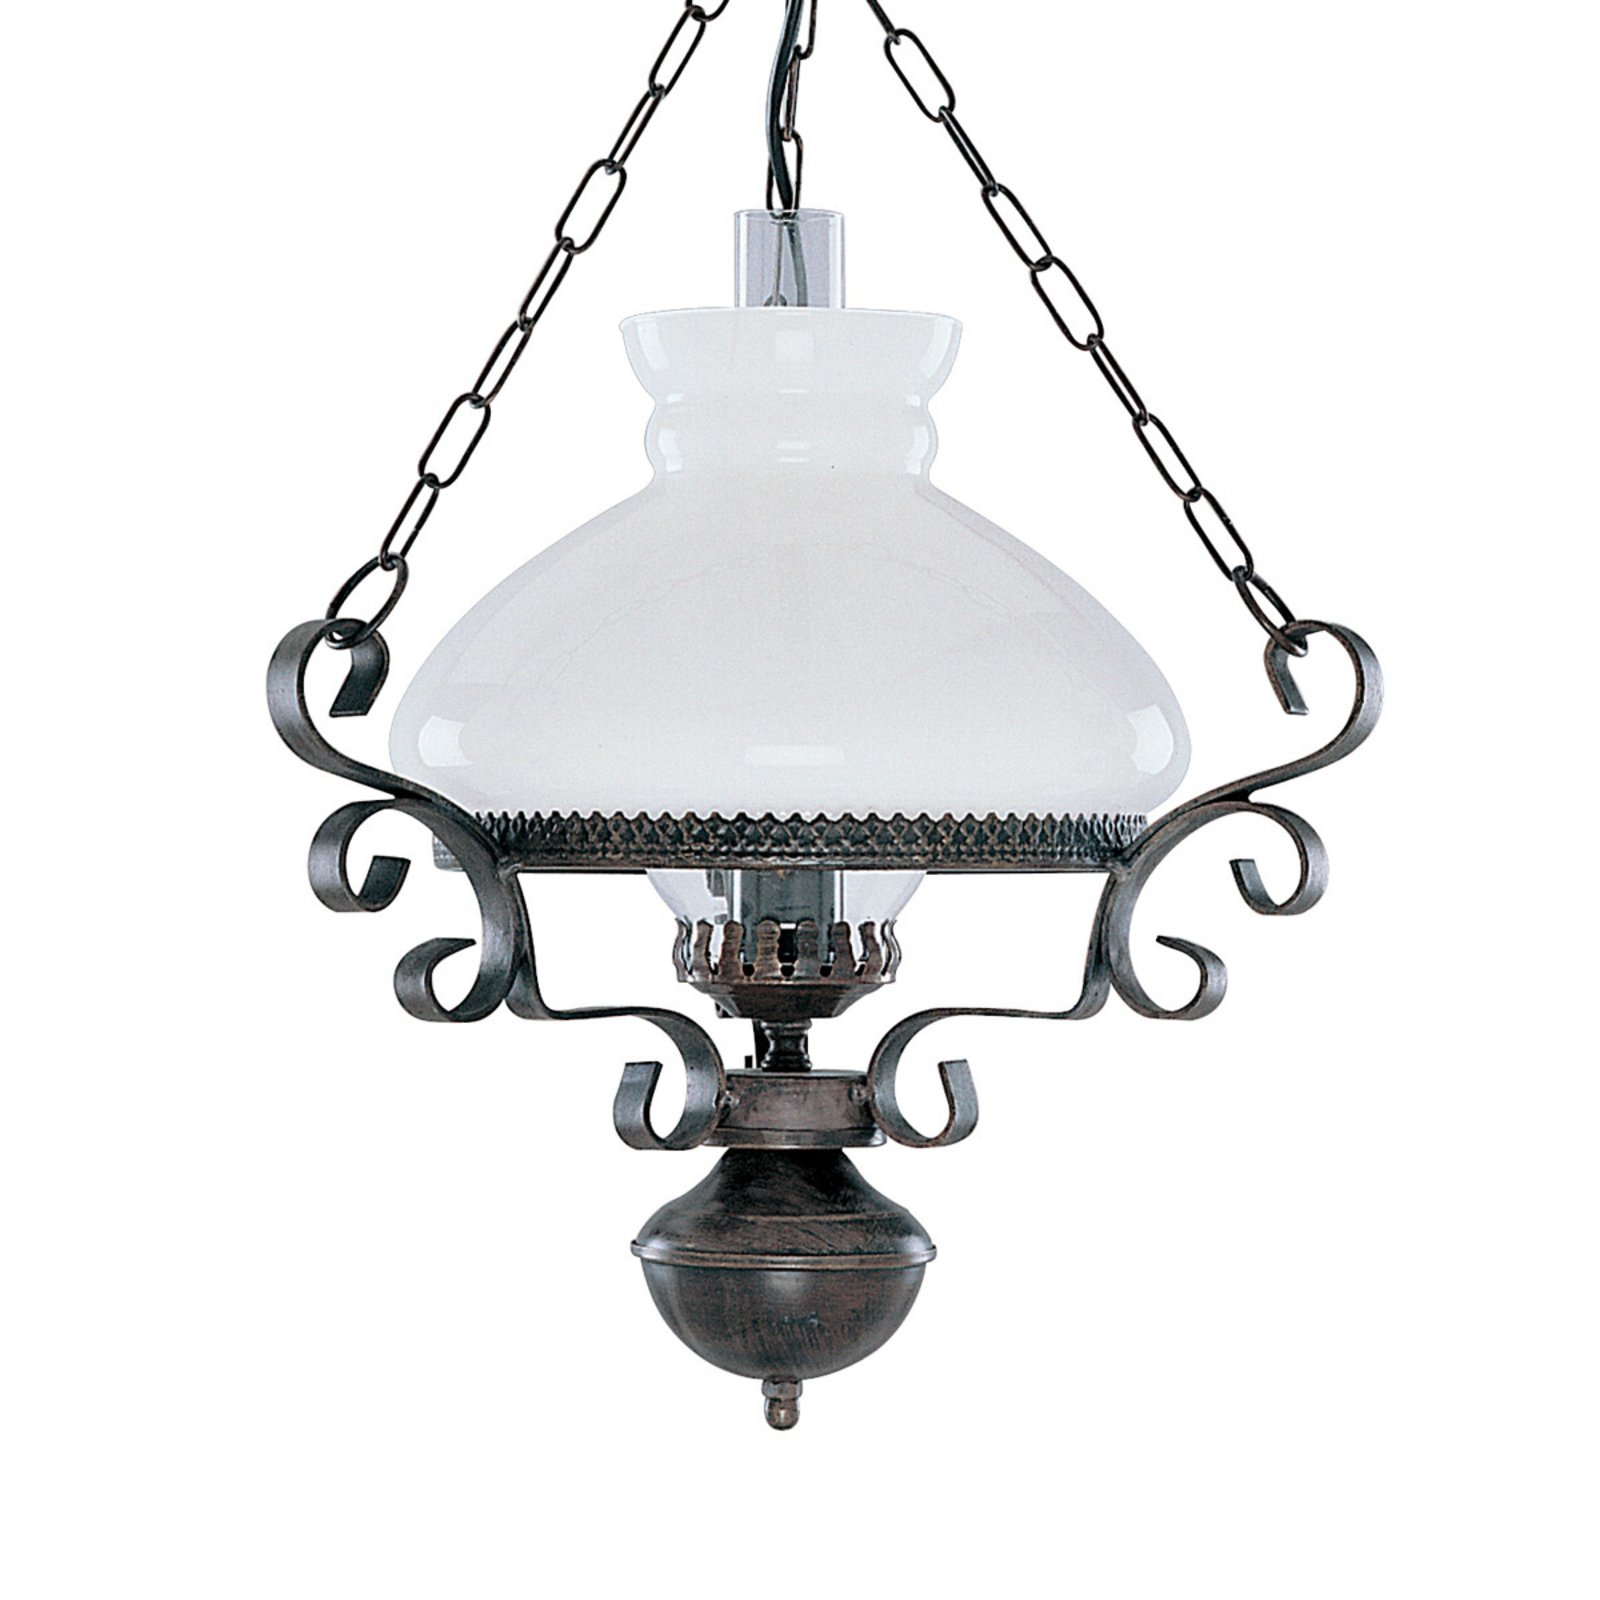 OIL LANTERN - hanglamp met antieke charme